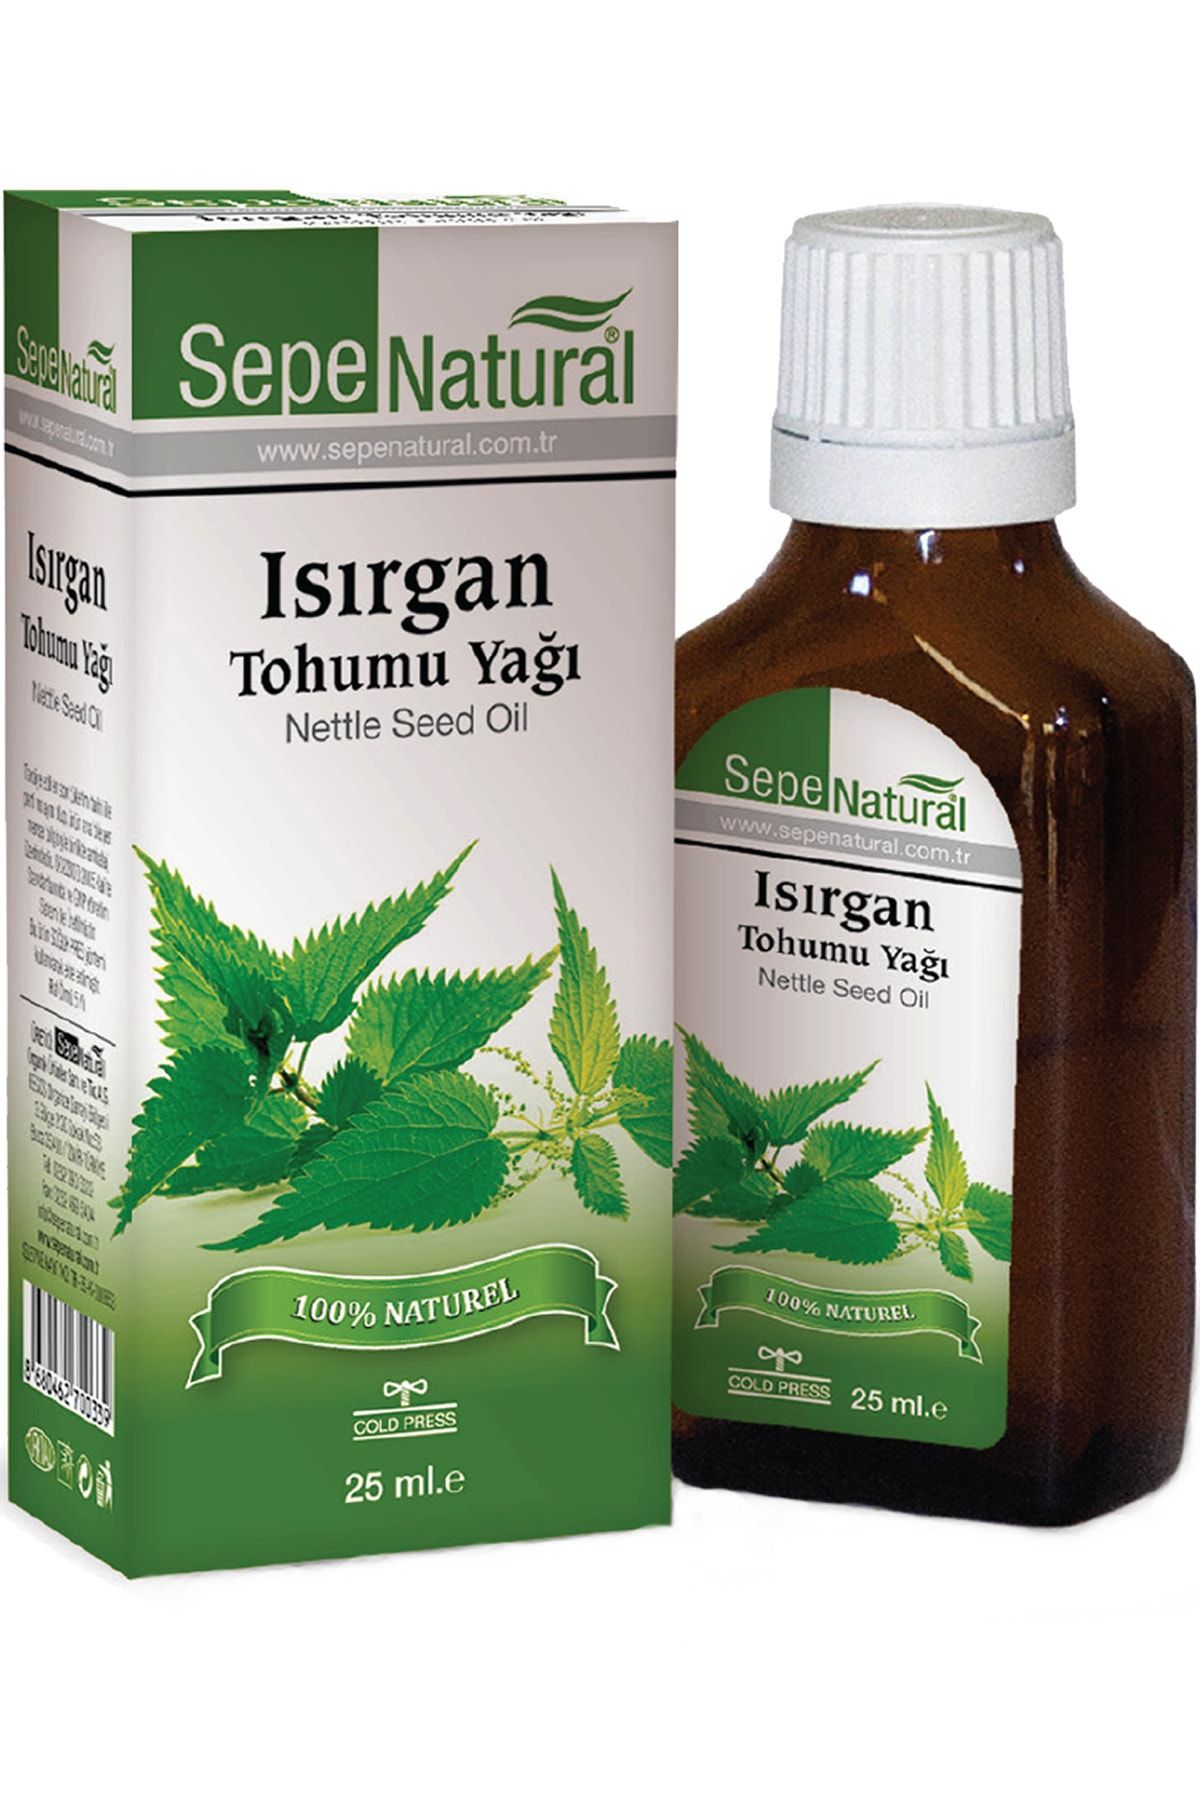 Sepe Natural Isırgan Tohumu Yağı 25 ml Isırgan Yağı Nettle Seed Oil